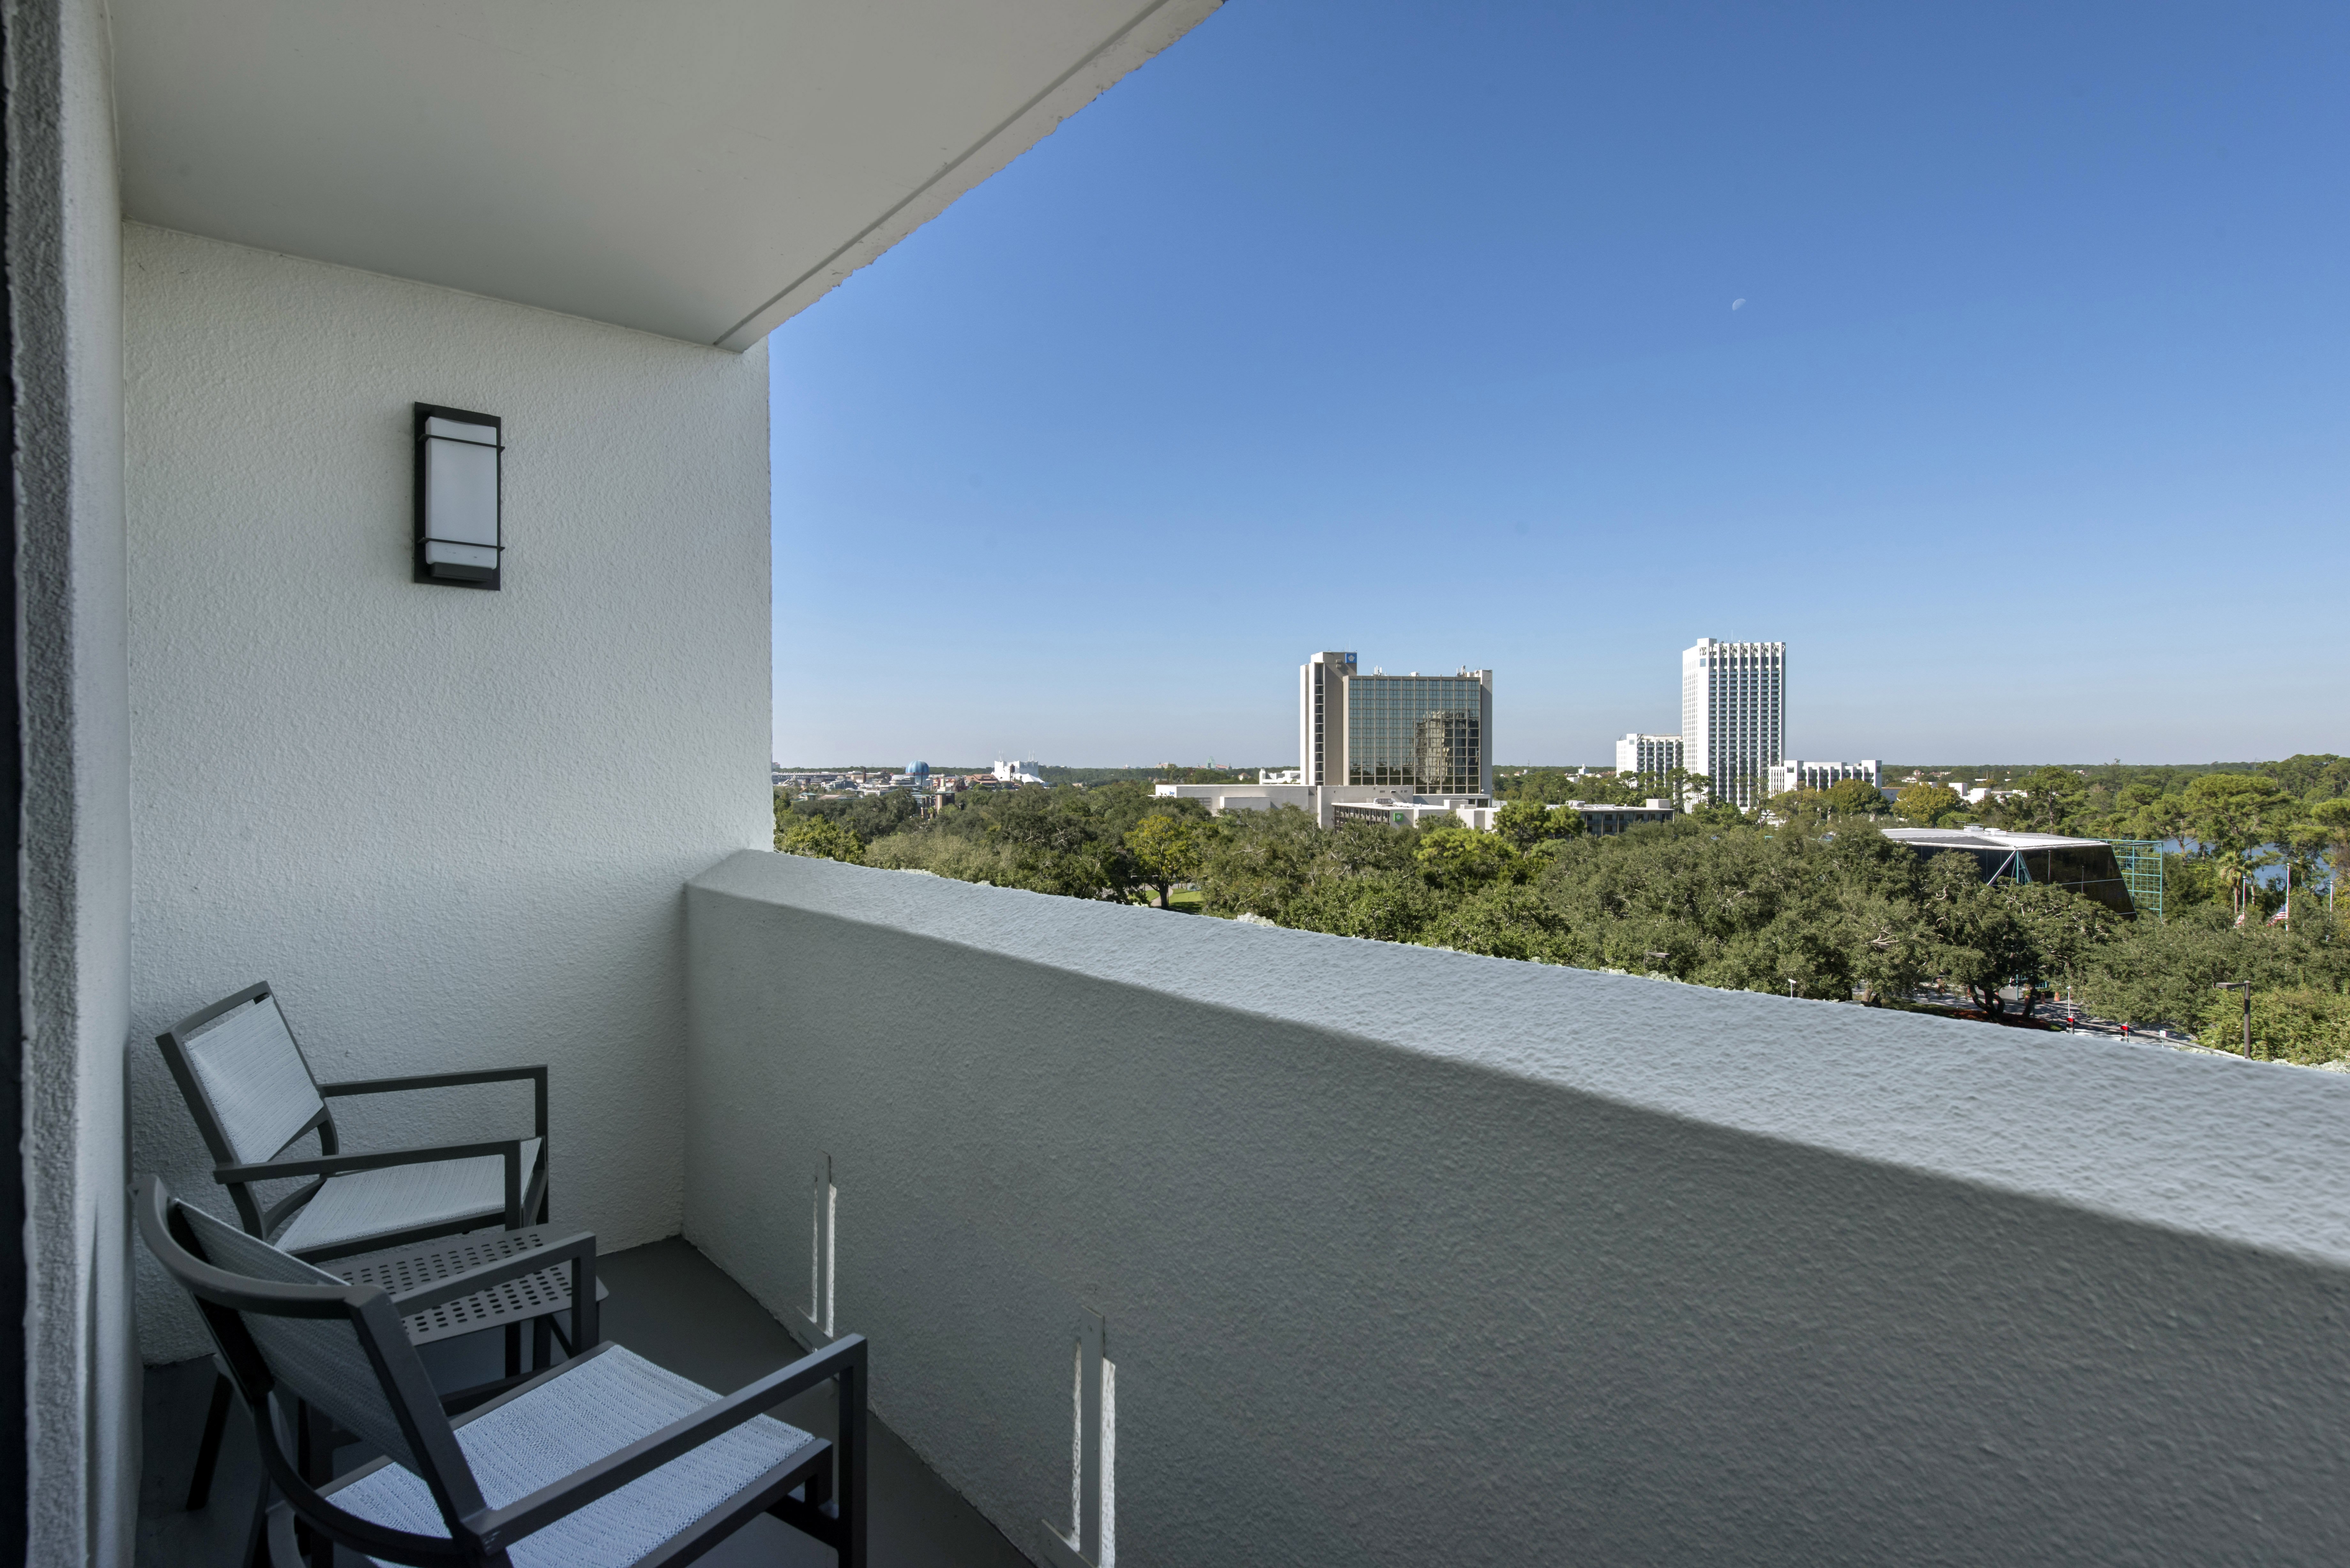 Enjoy views of Walt Disney World right from your balcony